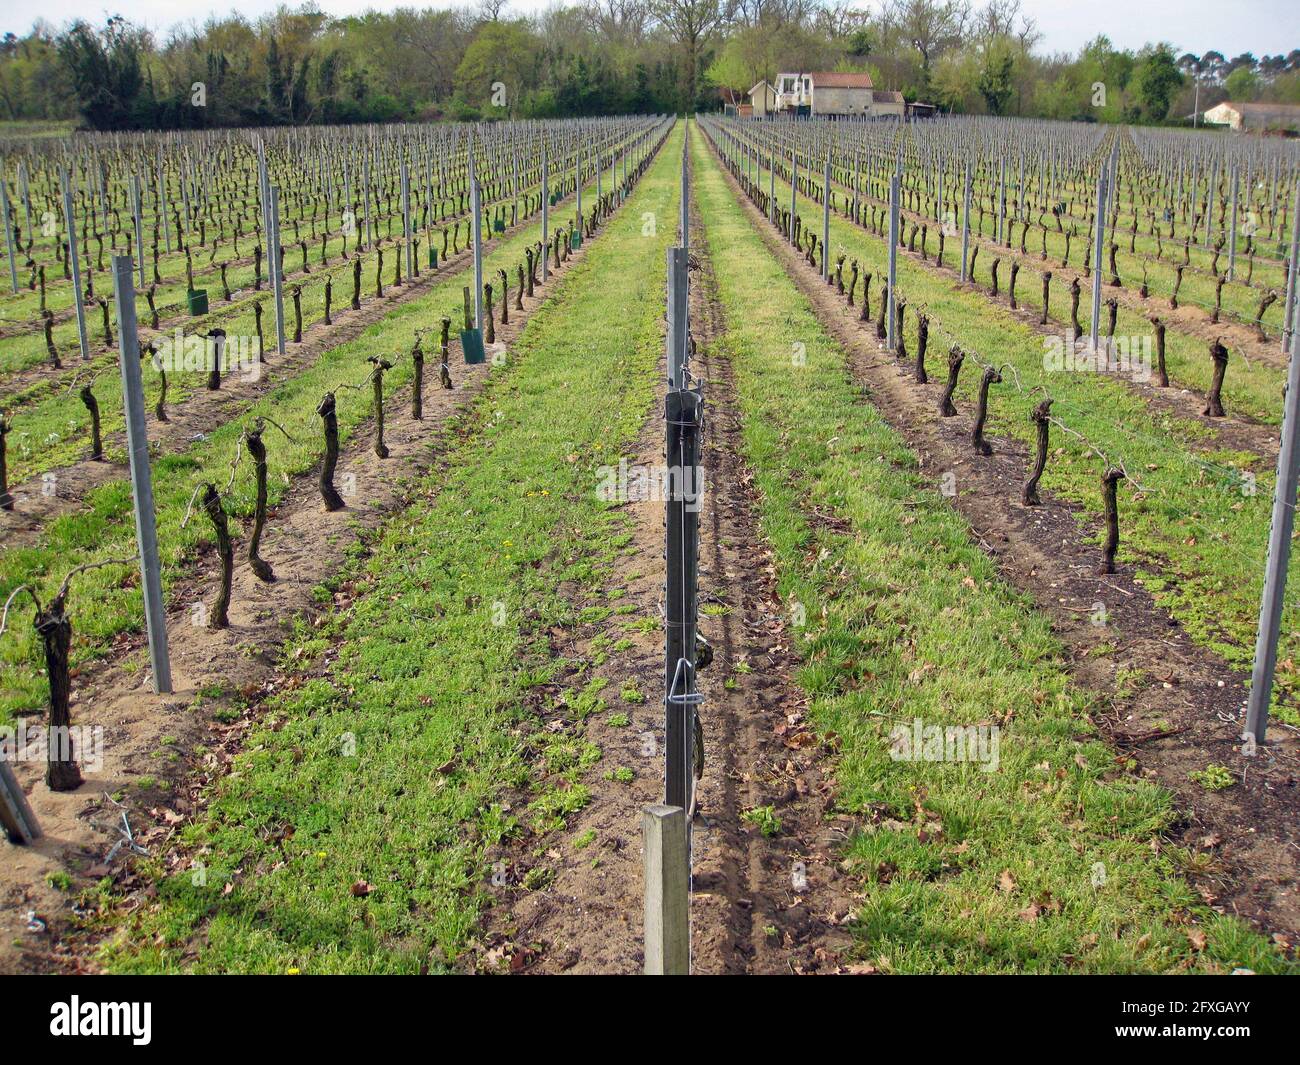 Vineyards of the Saint-Émilion region of France Stock Photo